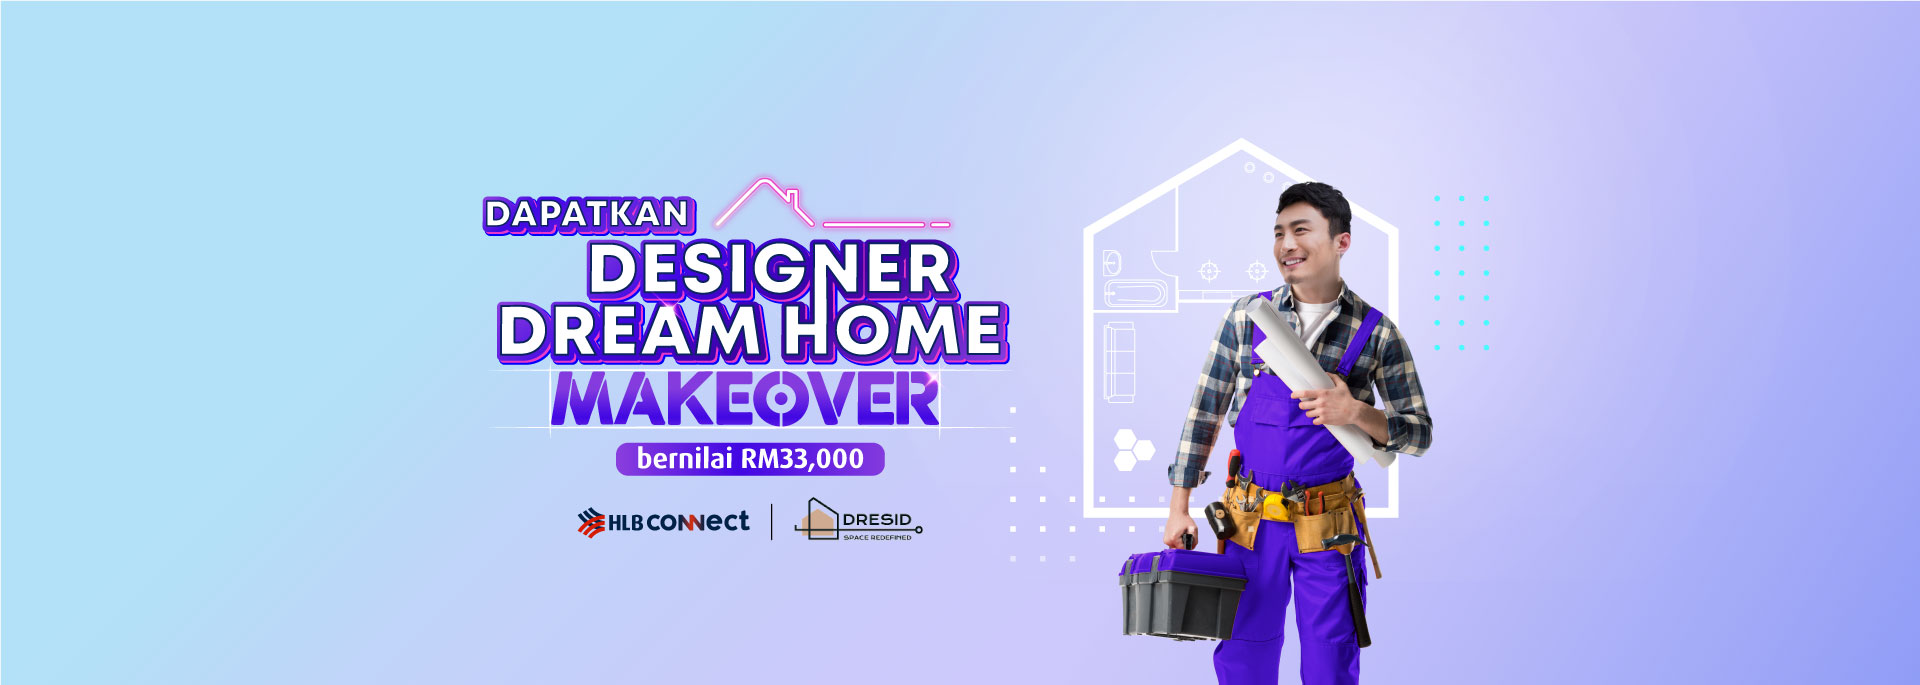 Dapatkan peluang memenangi Dream Home Makeover bernilai RM33,000 apabila anda mohon produk